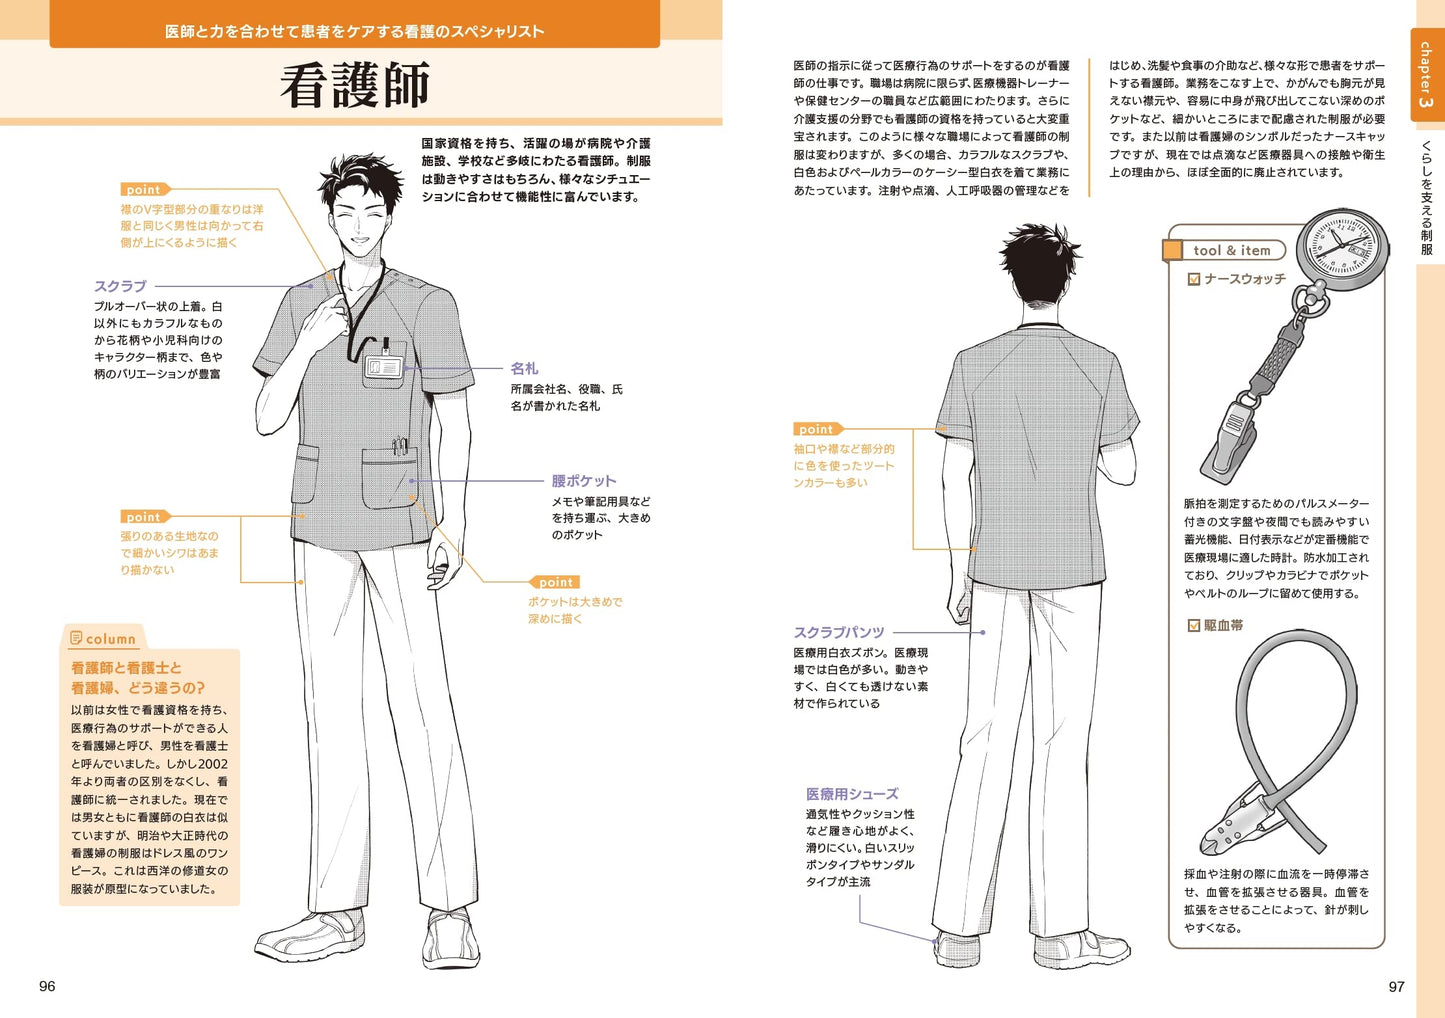 Digital Illustration "Working Uniform" Encyclopedia